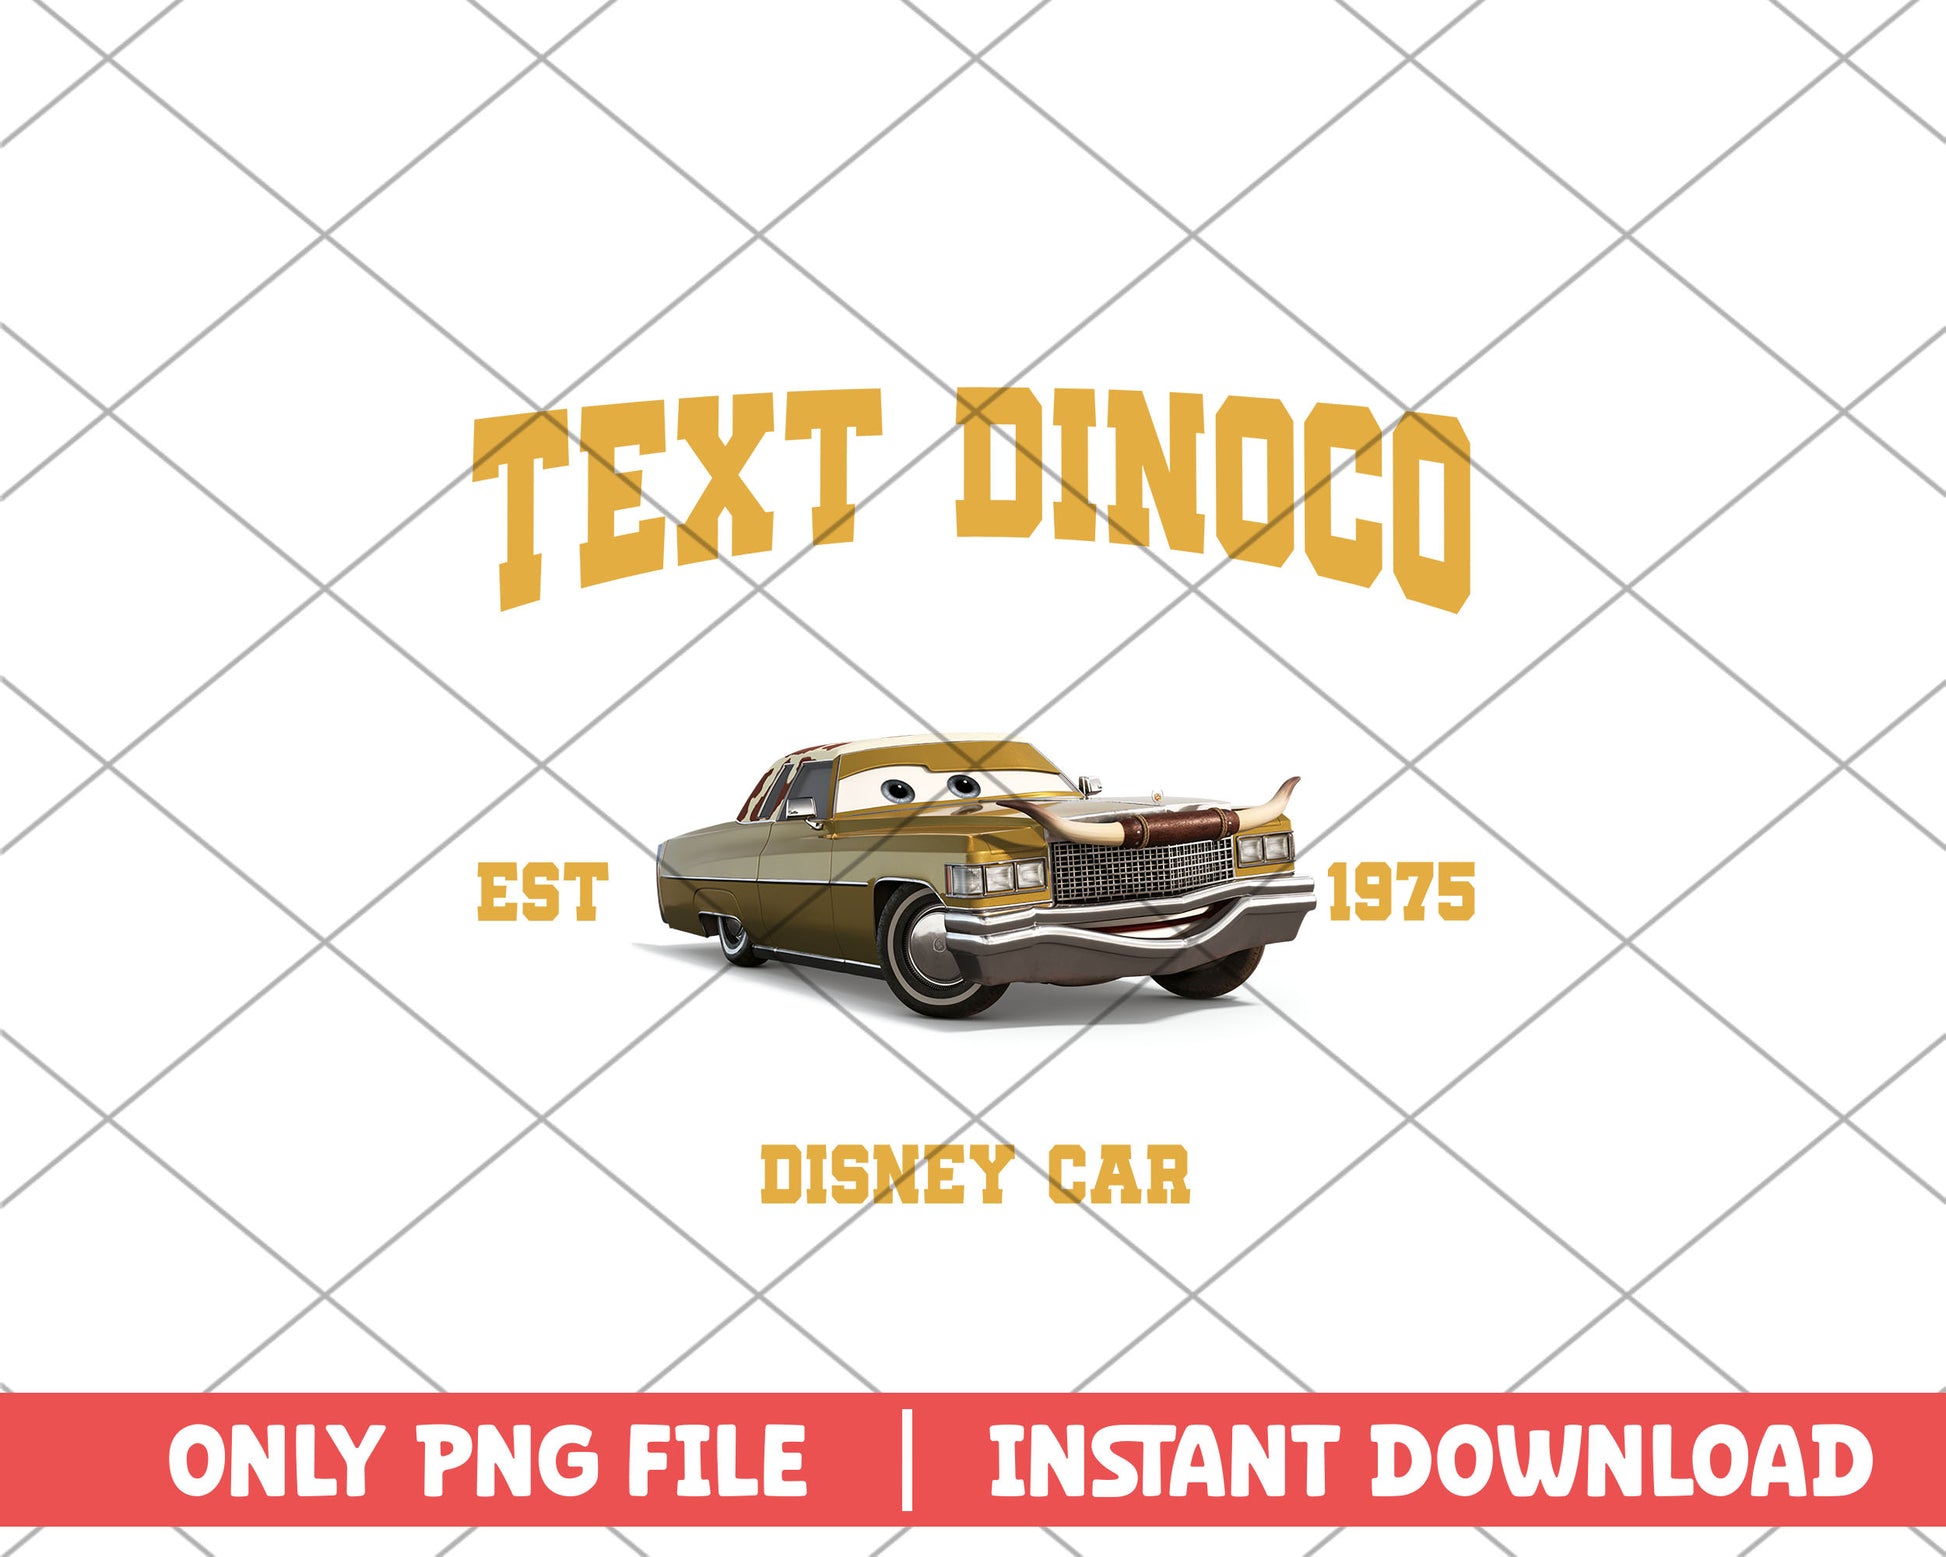 Disney car text dinono disney png